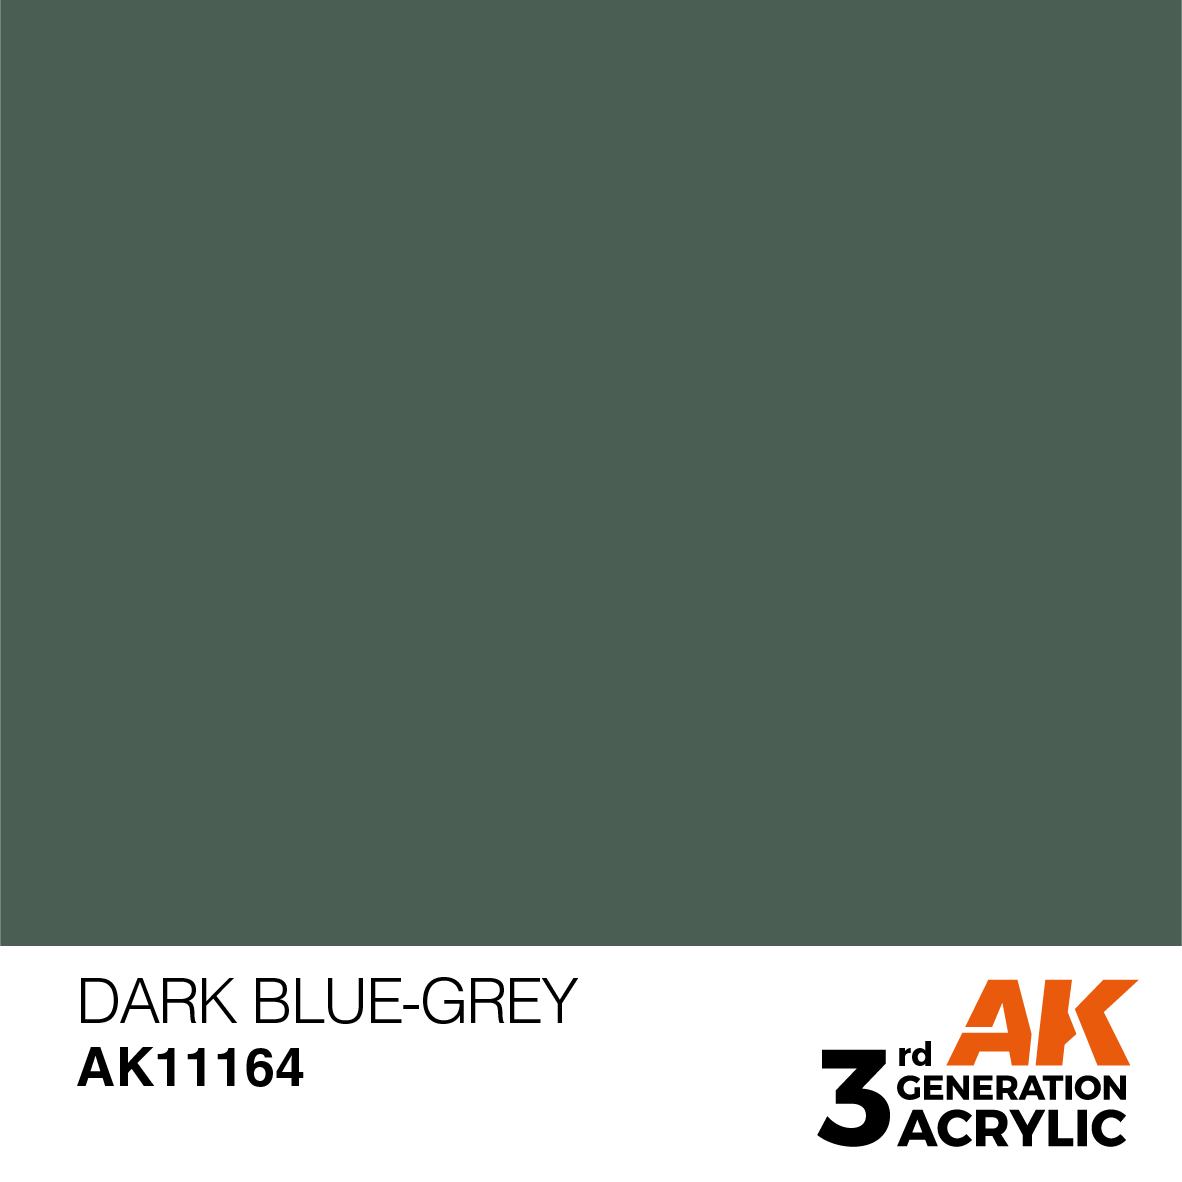 DARK BLUE-GREY – STANDARD